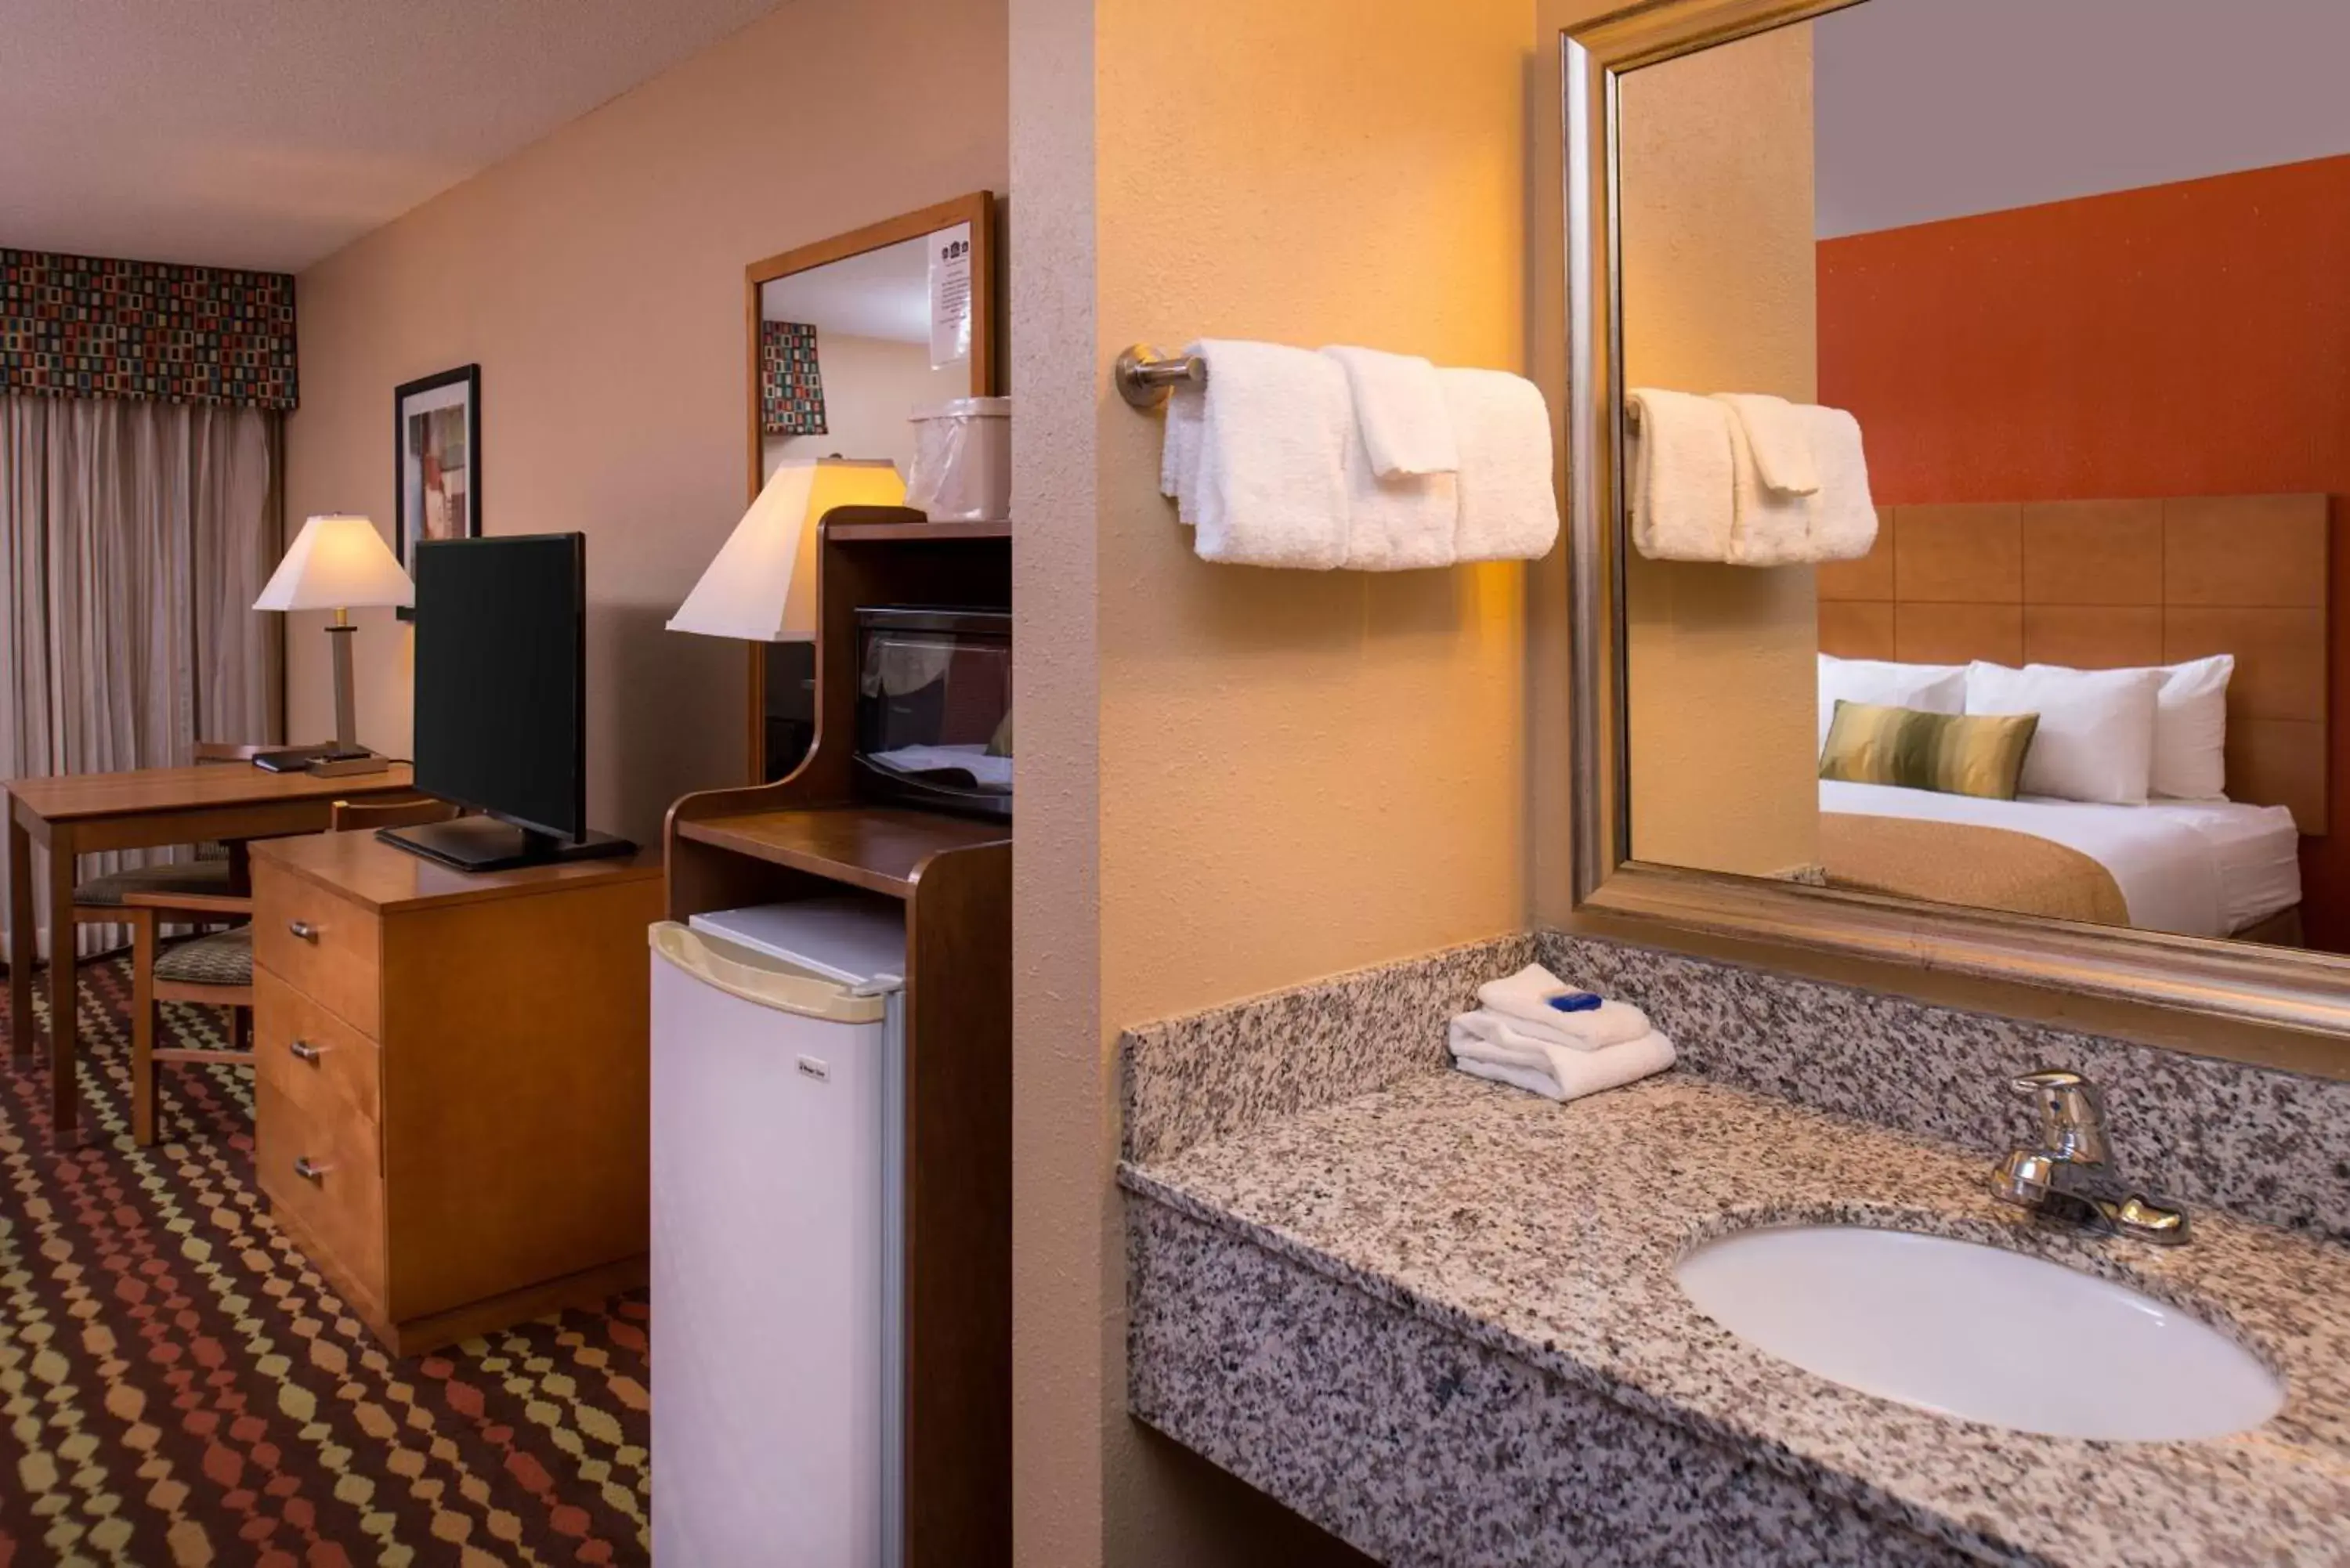 Photo of the whole room, Bathroom in Best Western Ambassador Inn & Suites